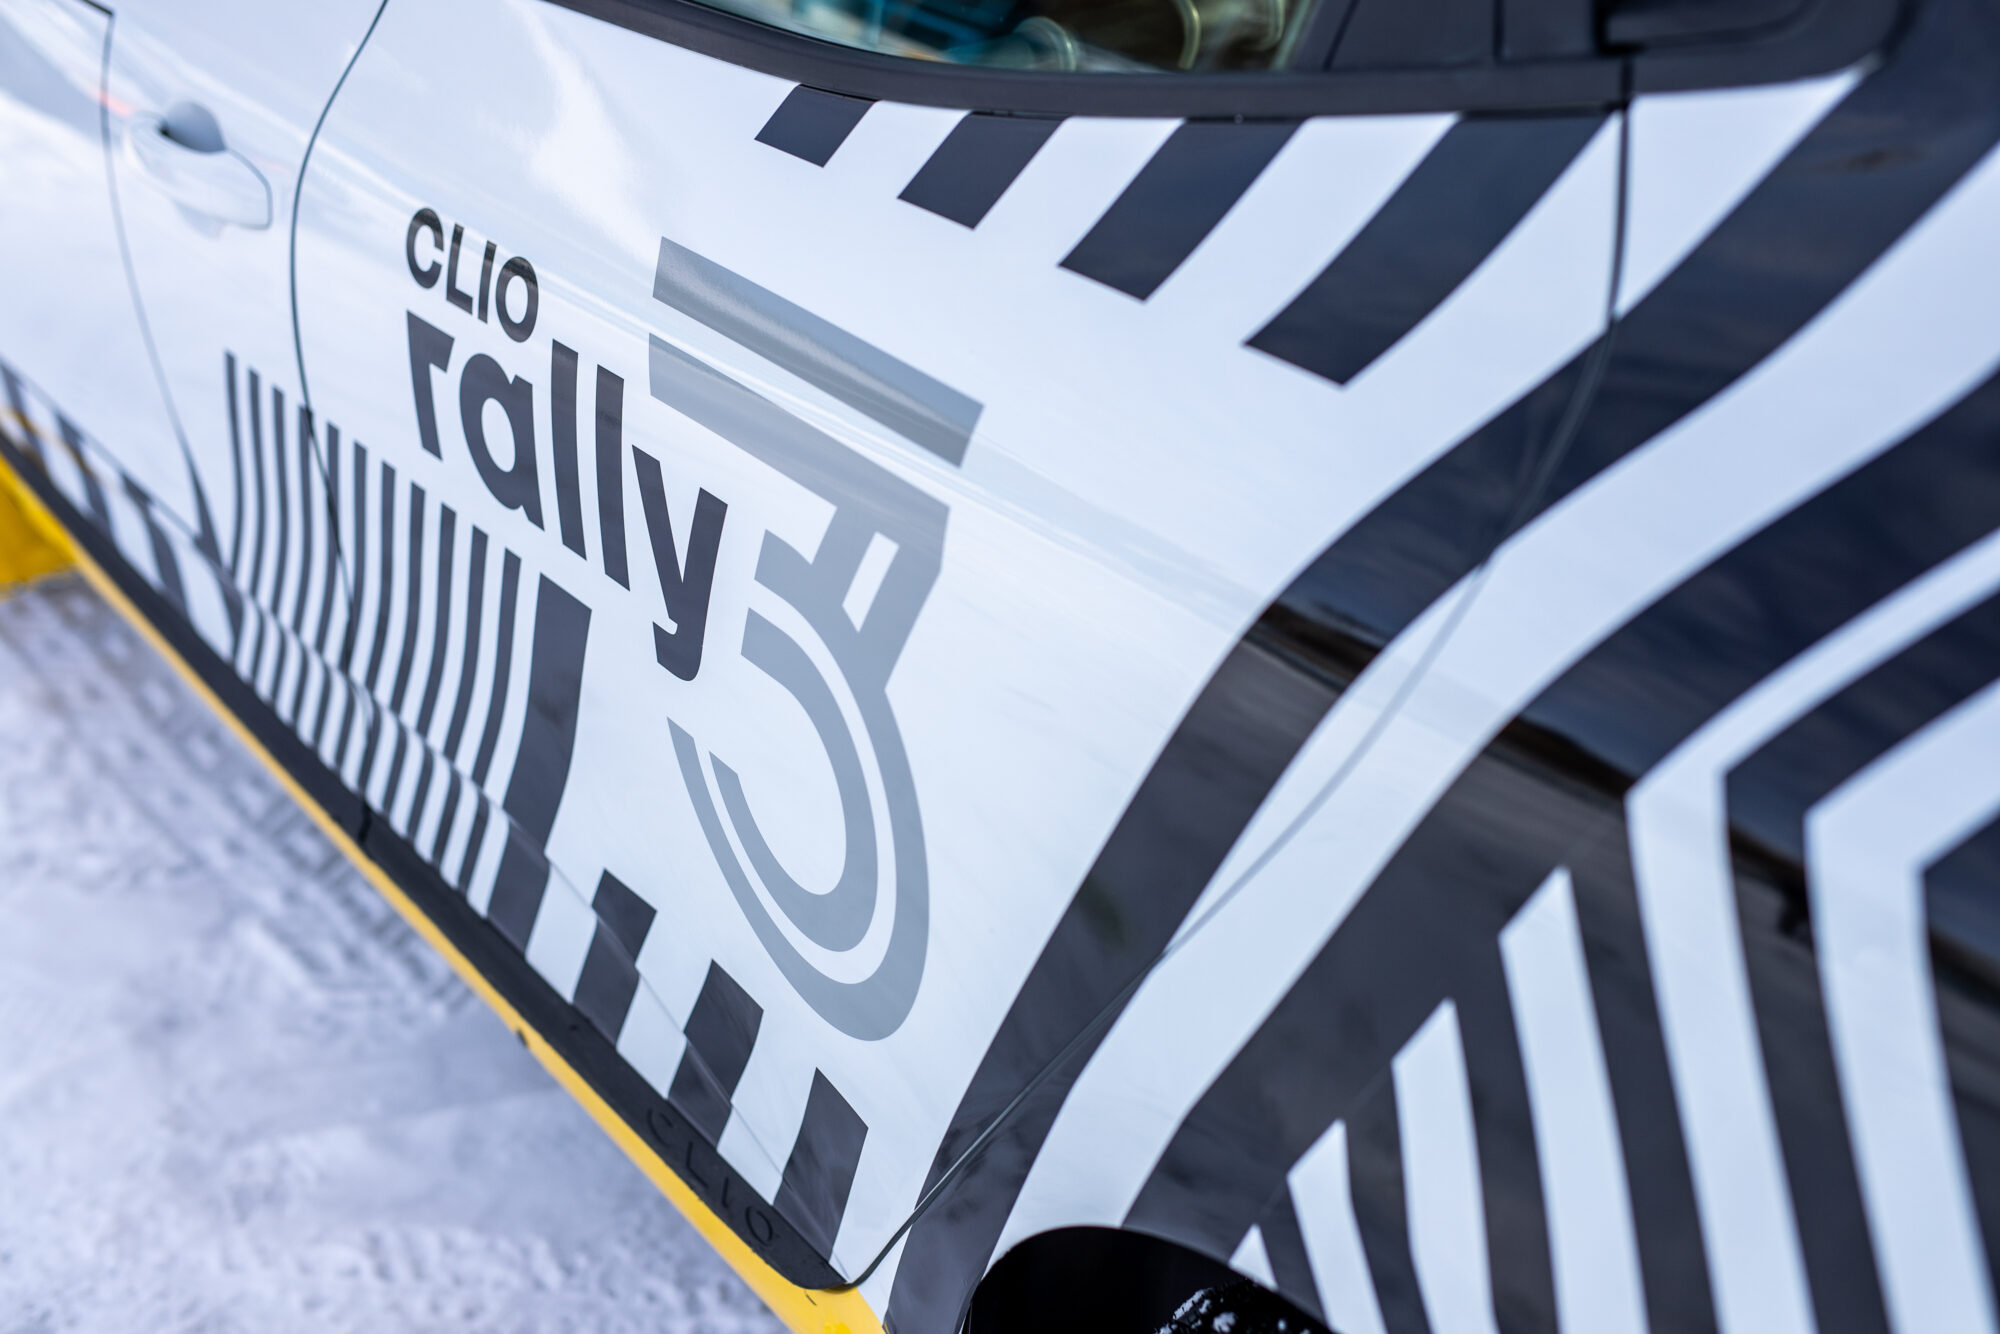 Clio_Rally3